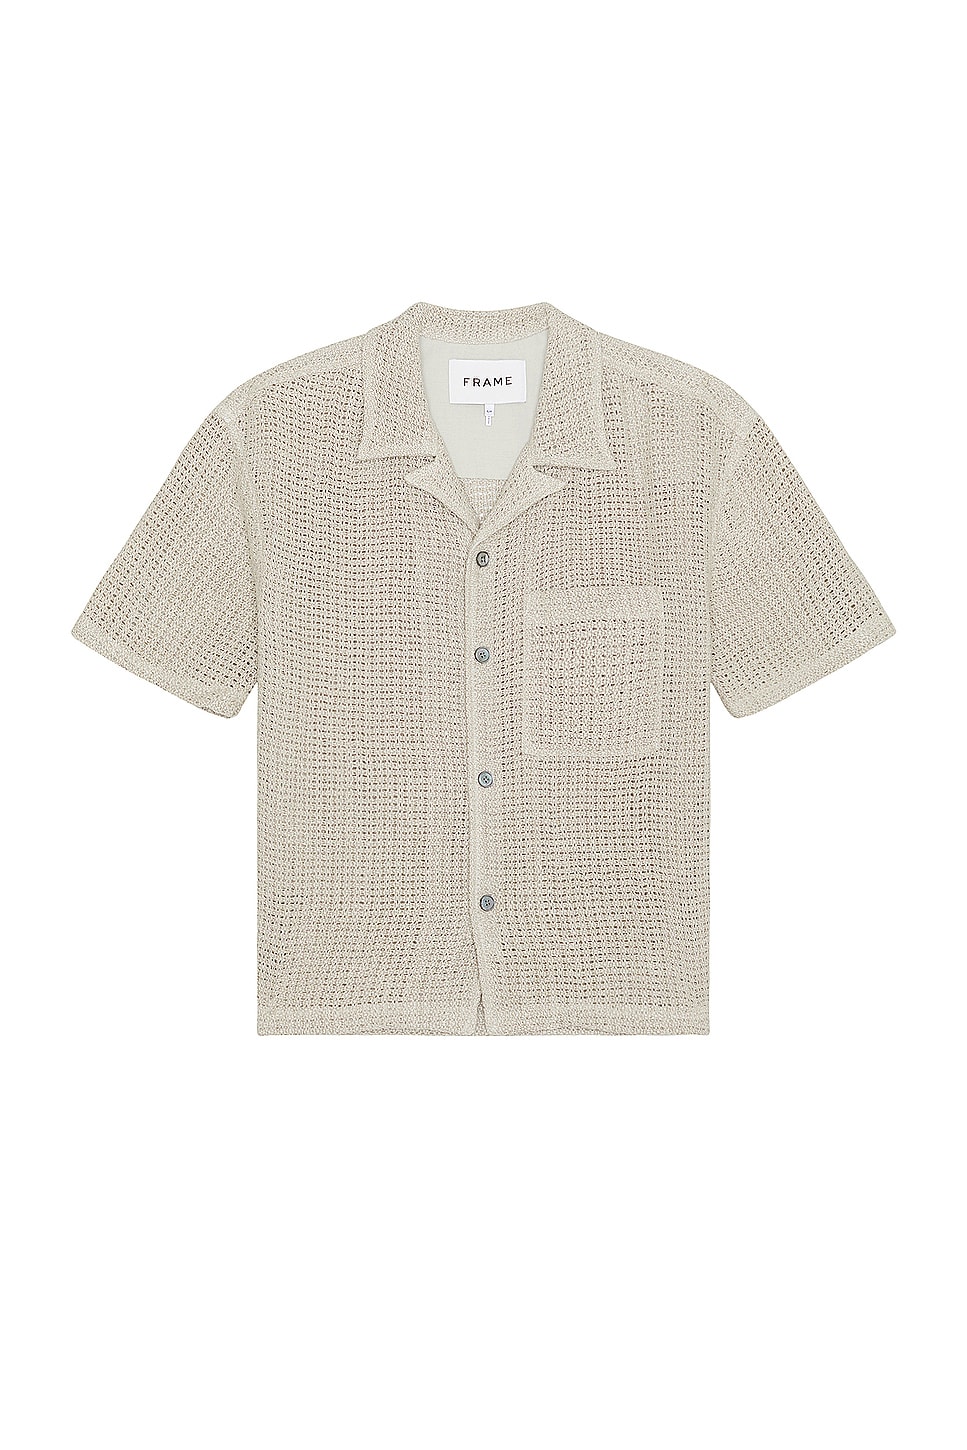 Image 1 of FRAME Open Weave Short Sleeve Shirt in Smoke Beige